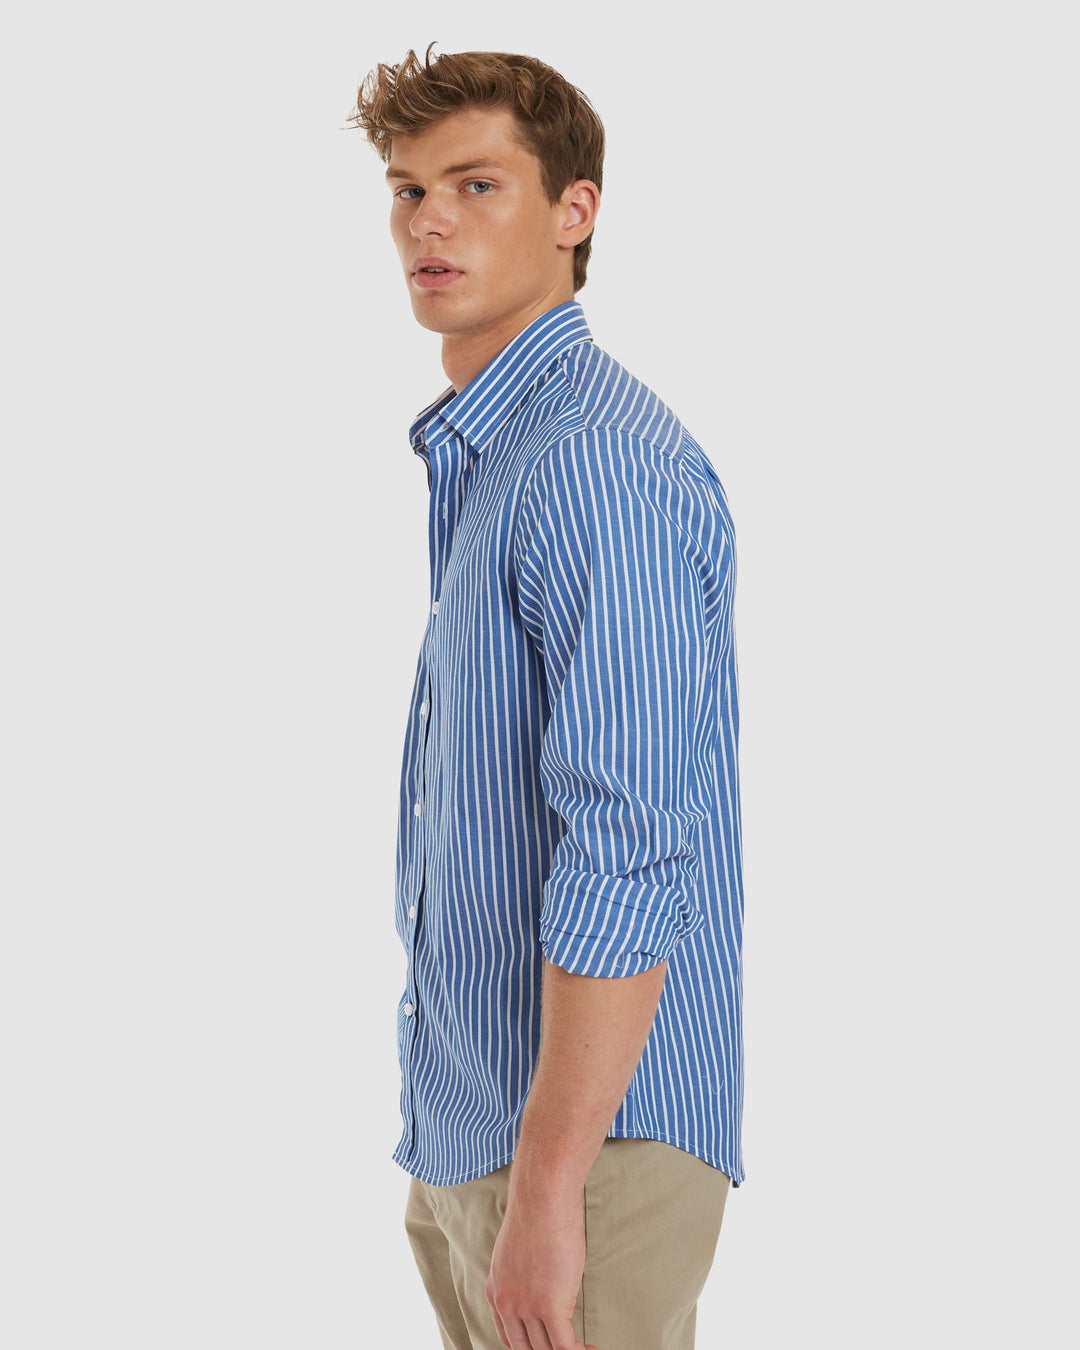 Vegas Blue Stripes Cotton Shirt  - Slim Fit